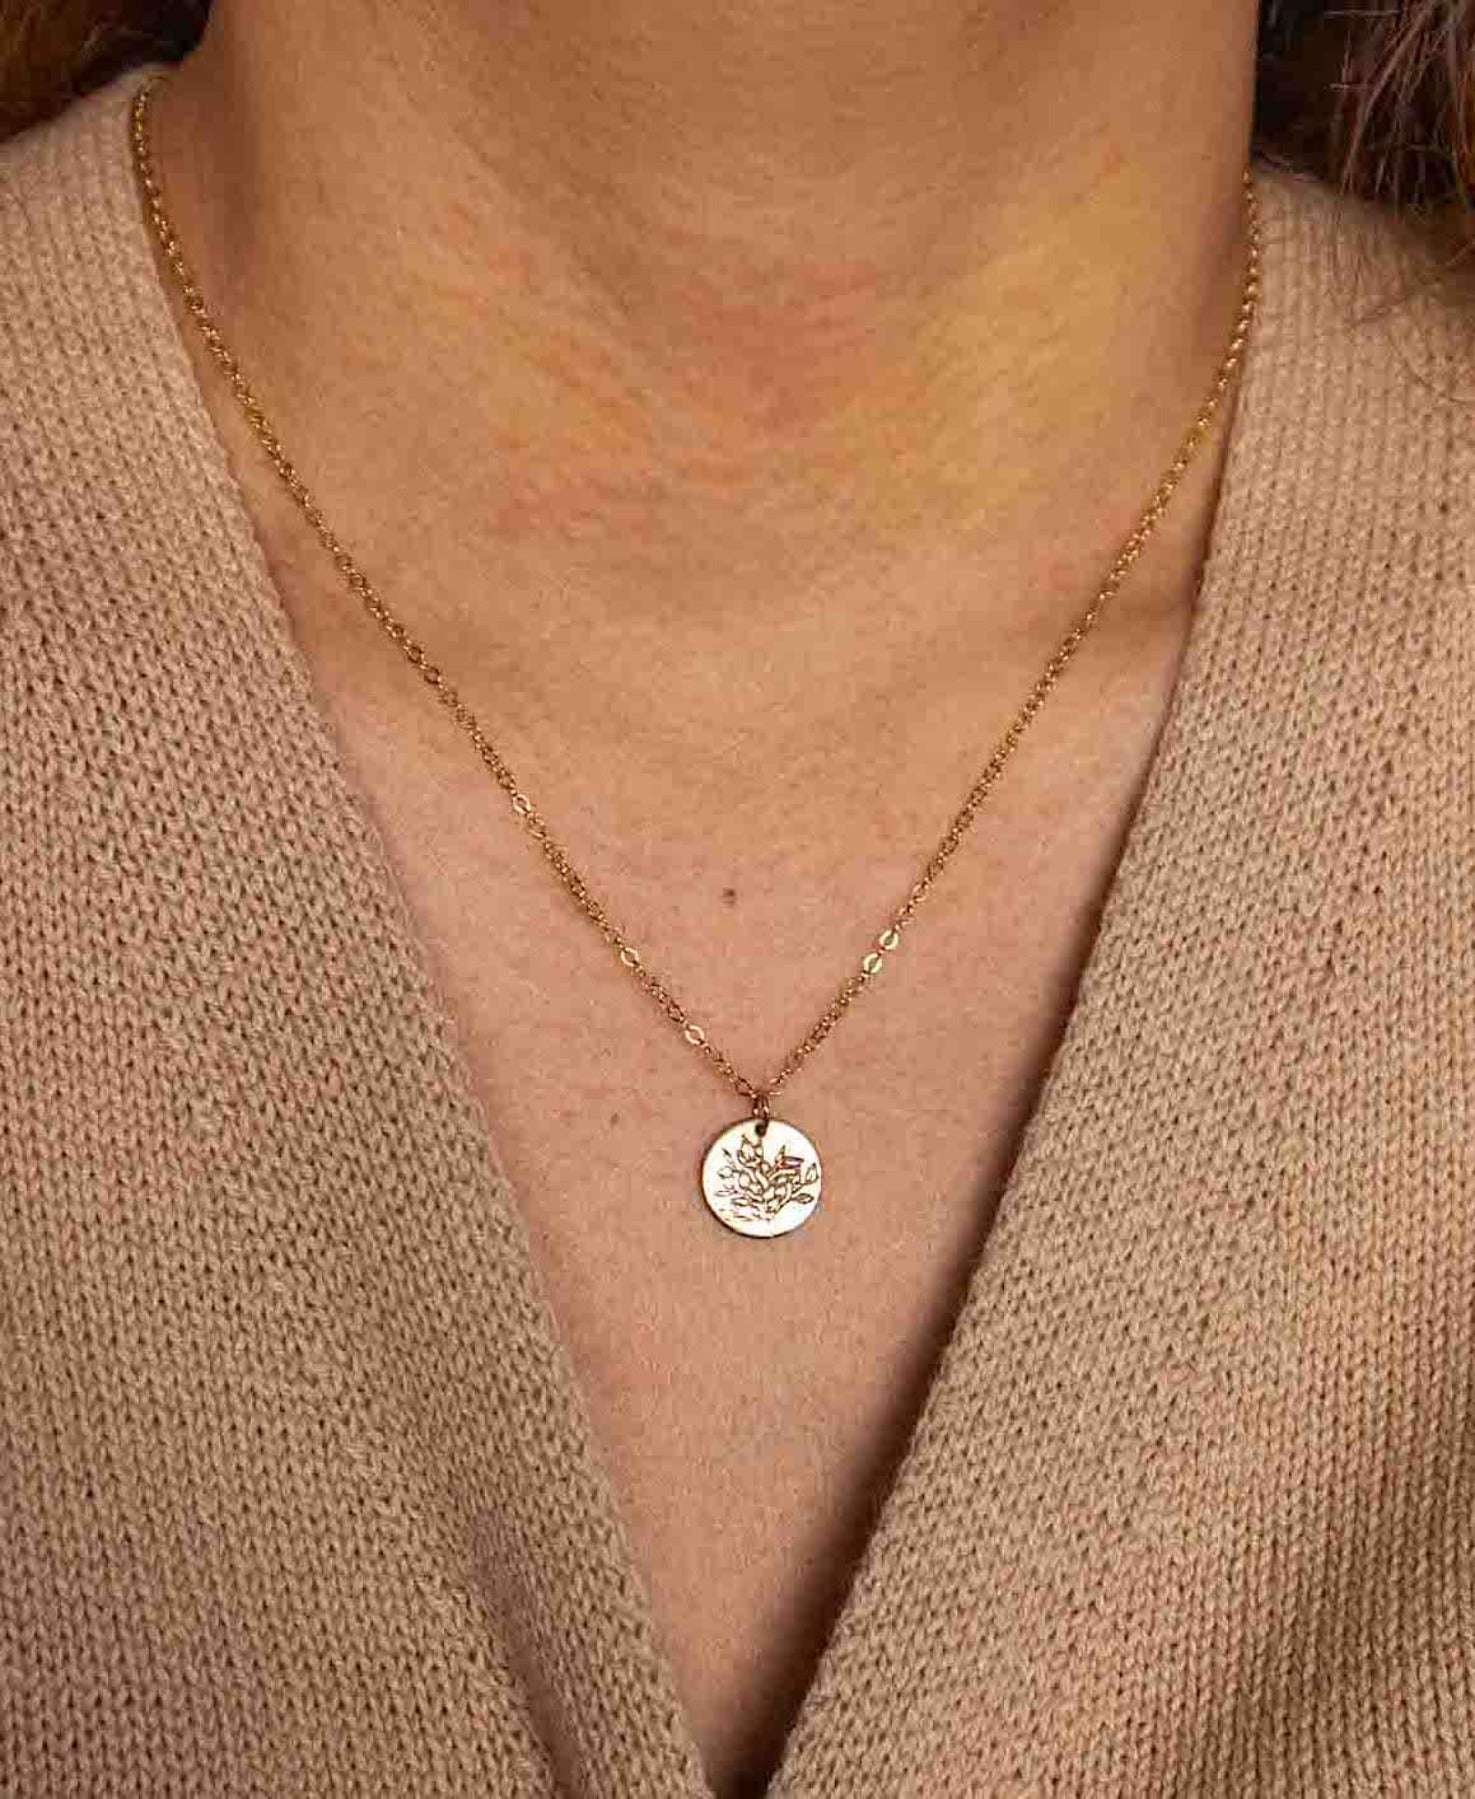 Birch tree pendant necklace worn